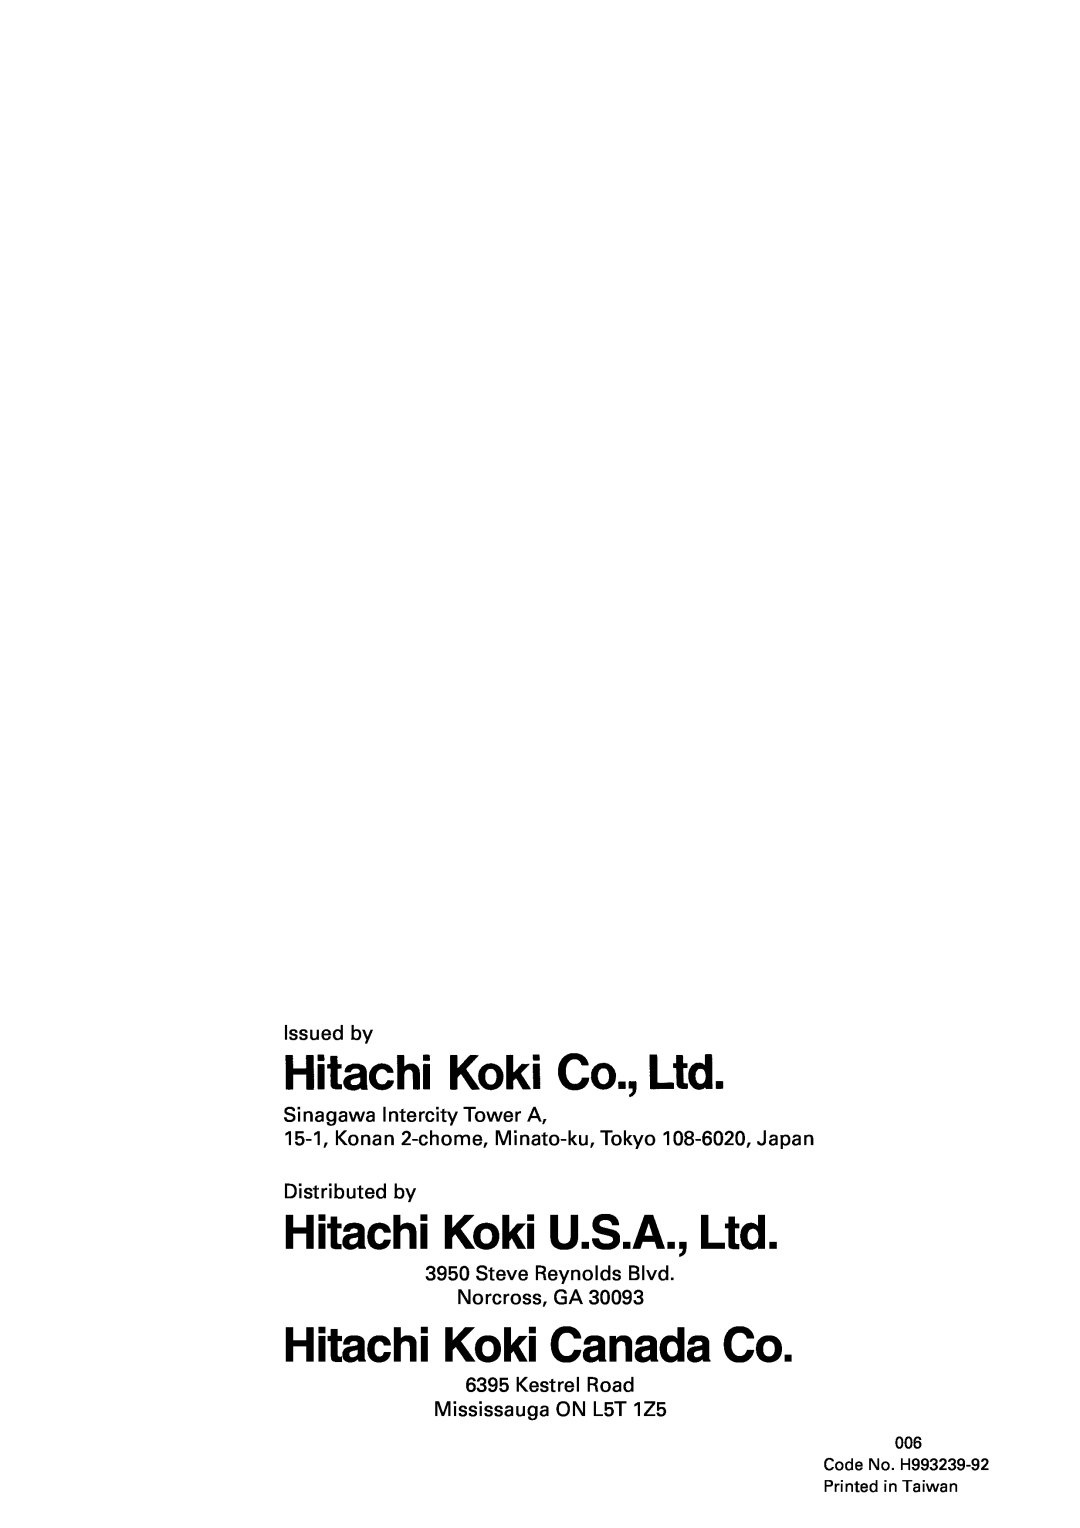 Hitachi C10RA2 Hitachi Koki Canada Co, Issued by Sinagawa Intercity Tower A, Steve Reynolds Blvd Norcross, GA 